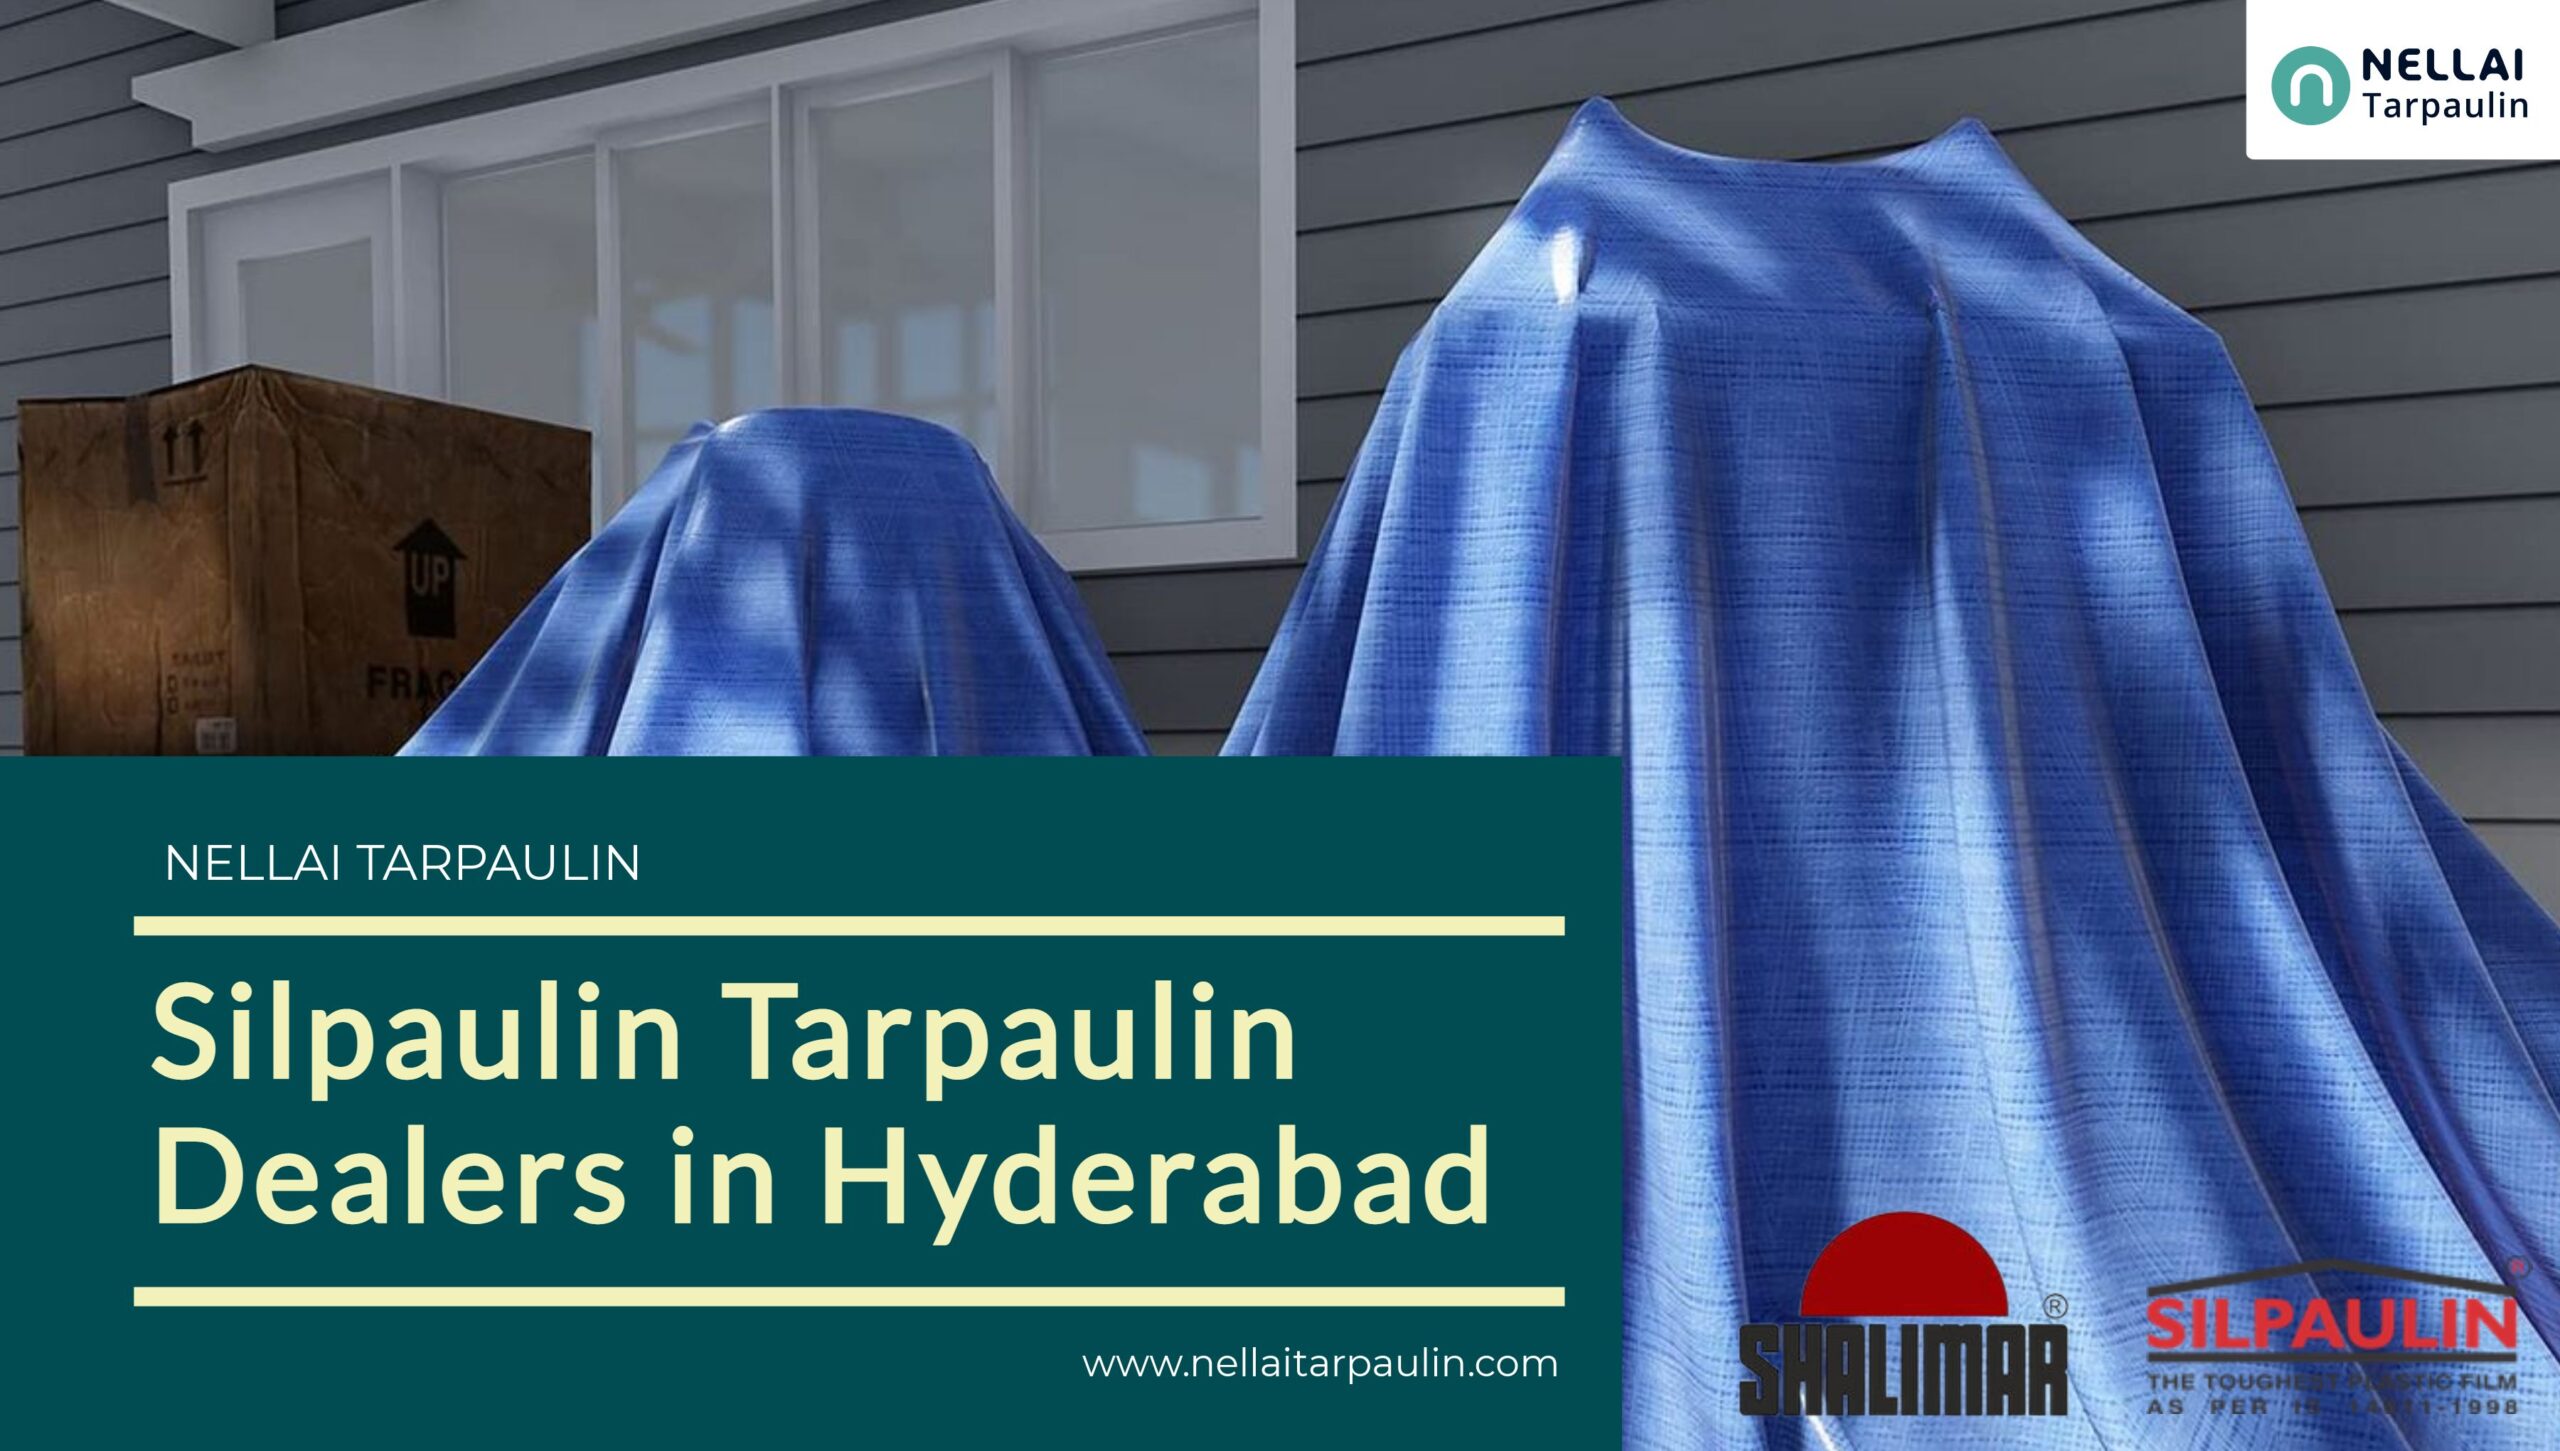 Silpaulin Tarpaulin Dealers in Hyderabad